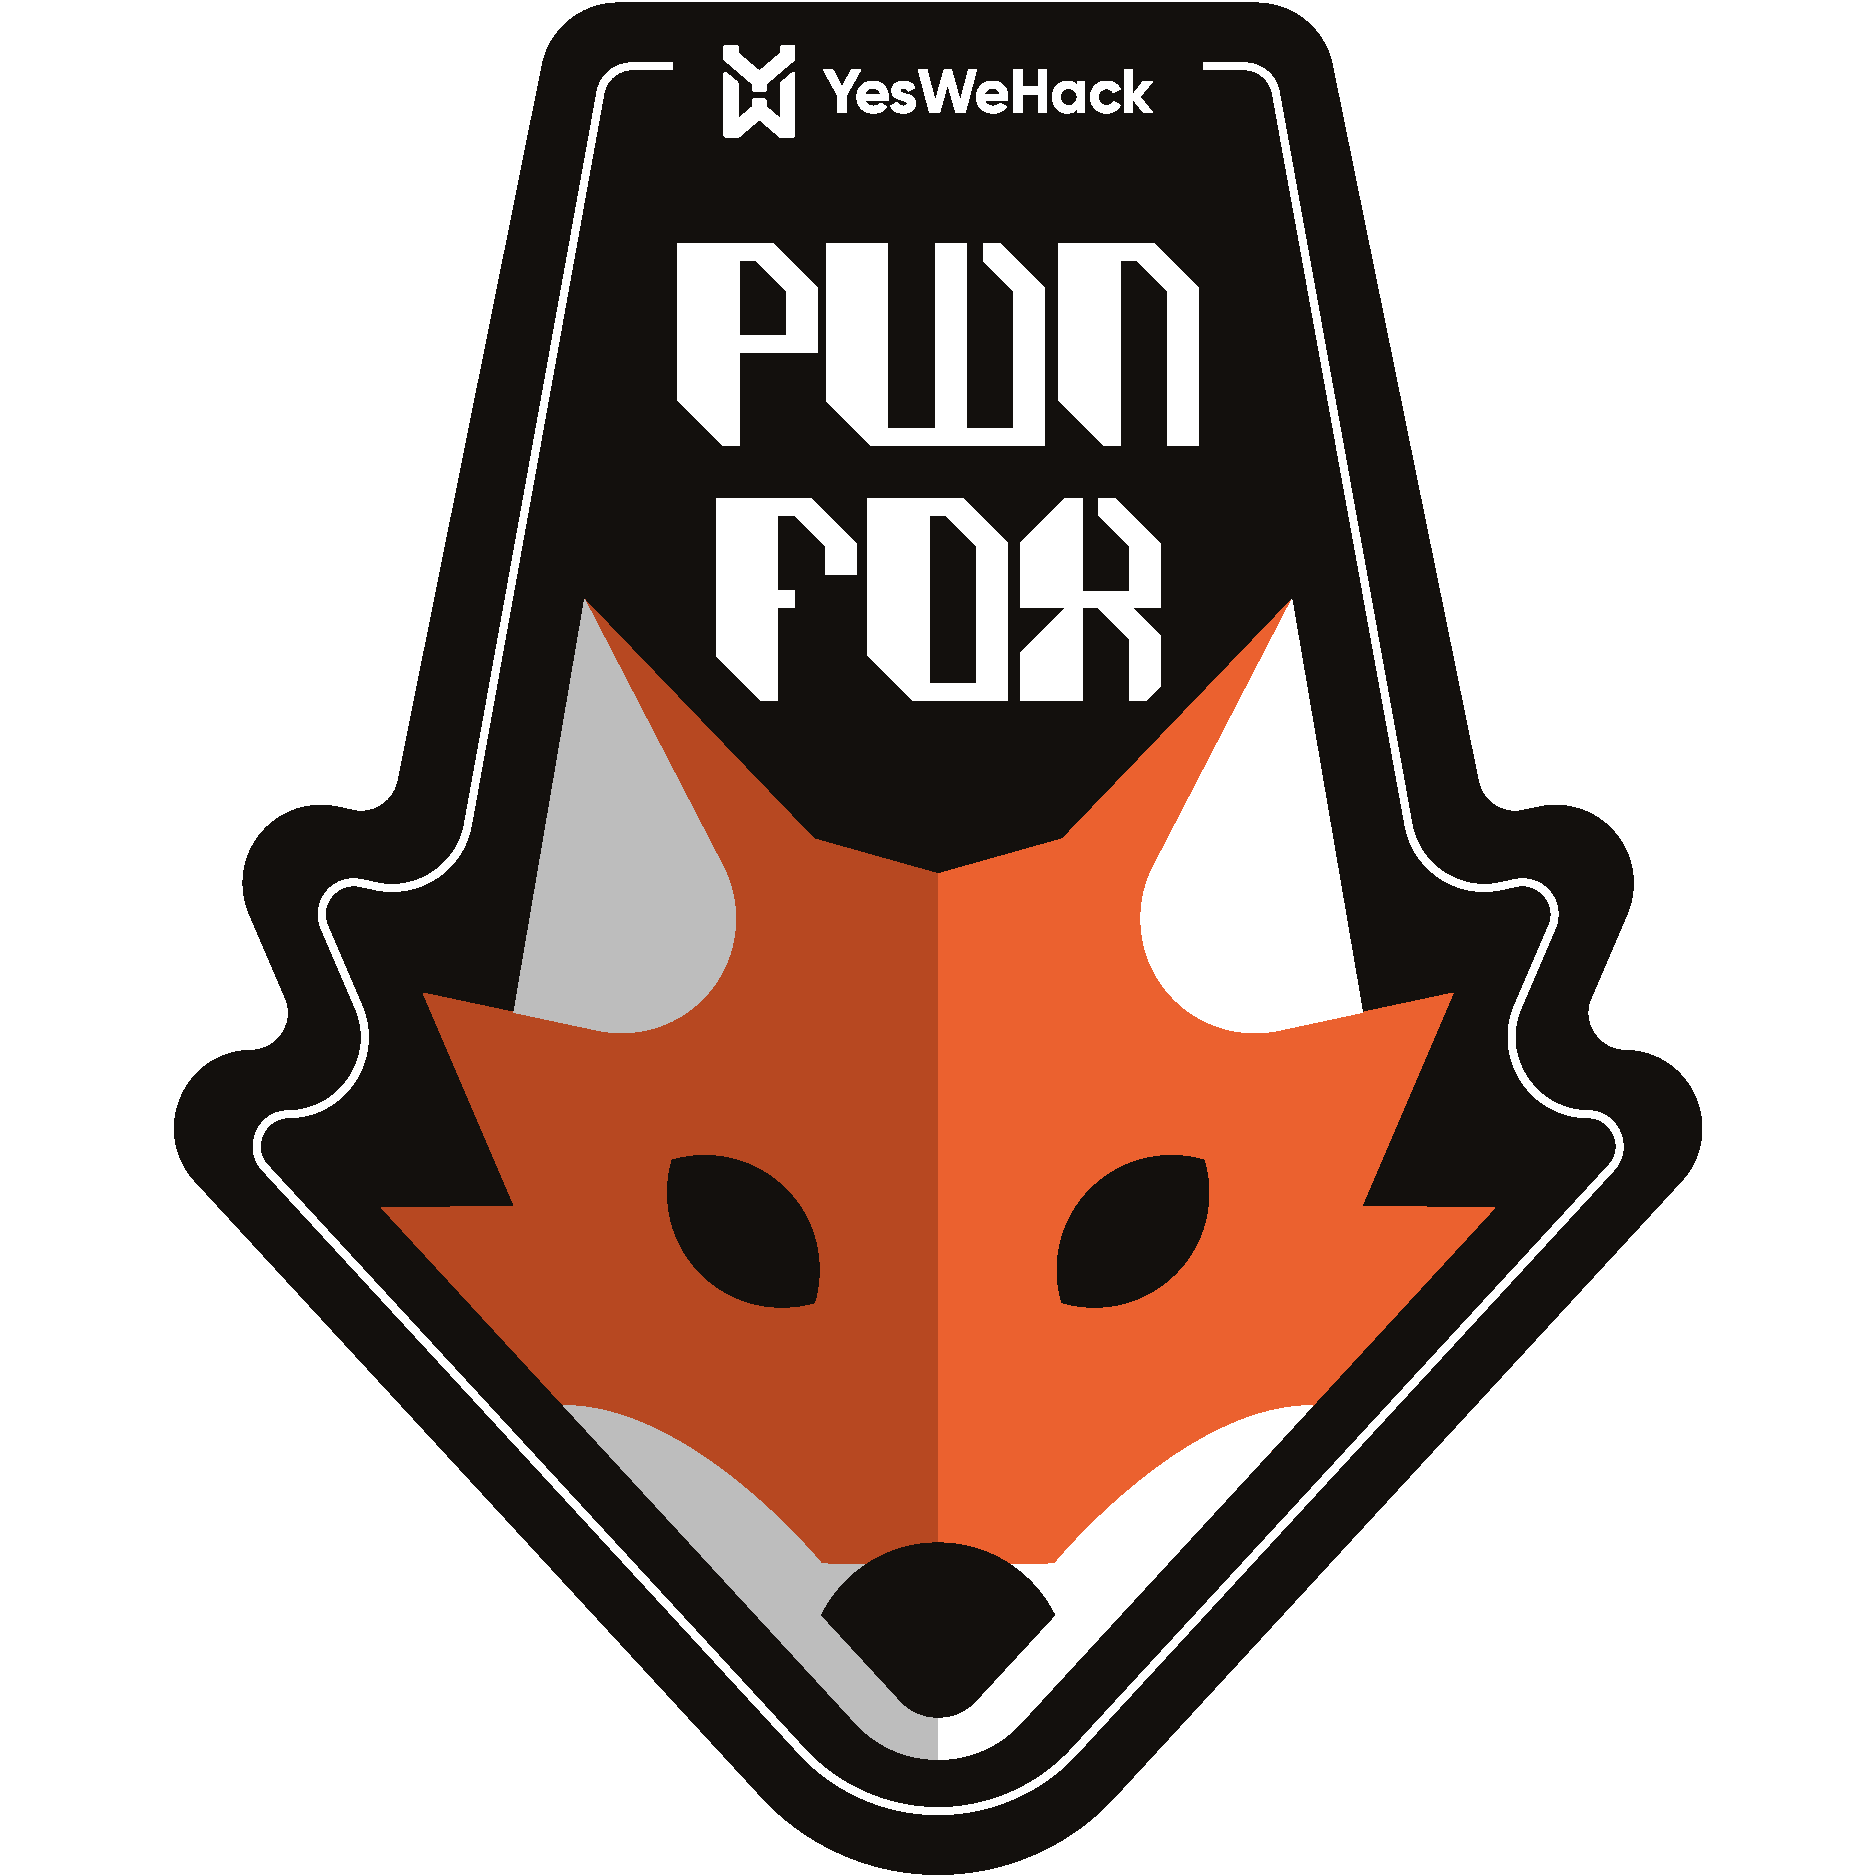 Pwn Fox Bug hunting tool by YesWeHack